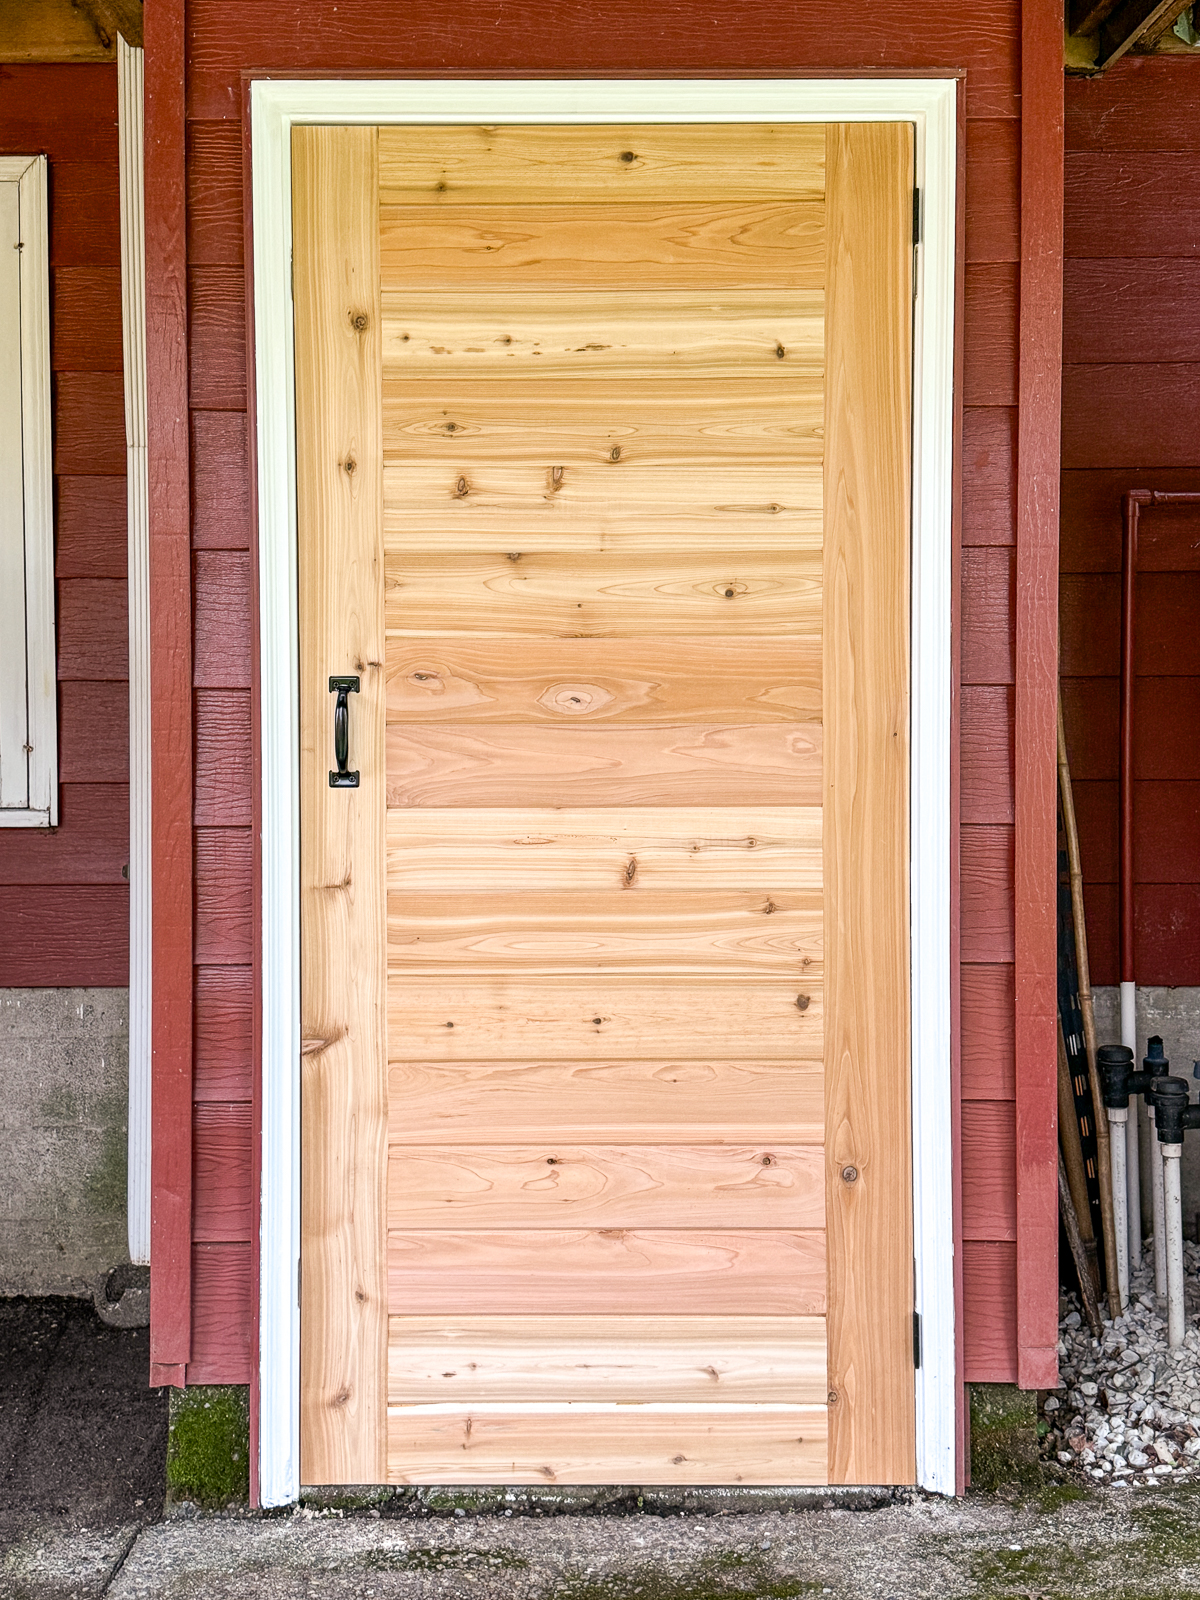 DIY shed door